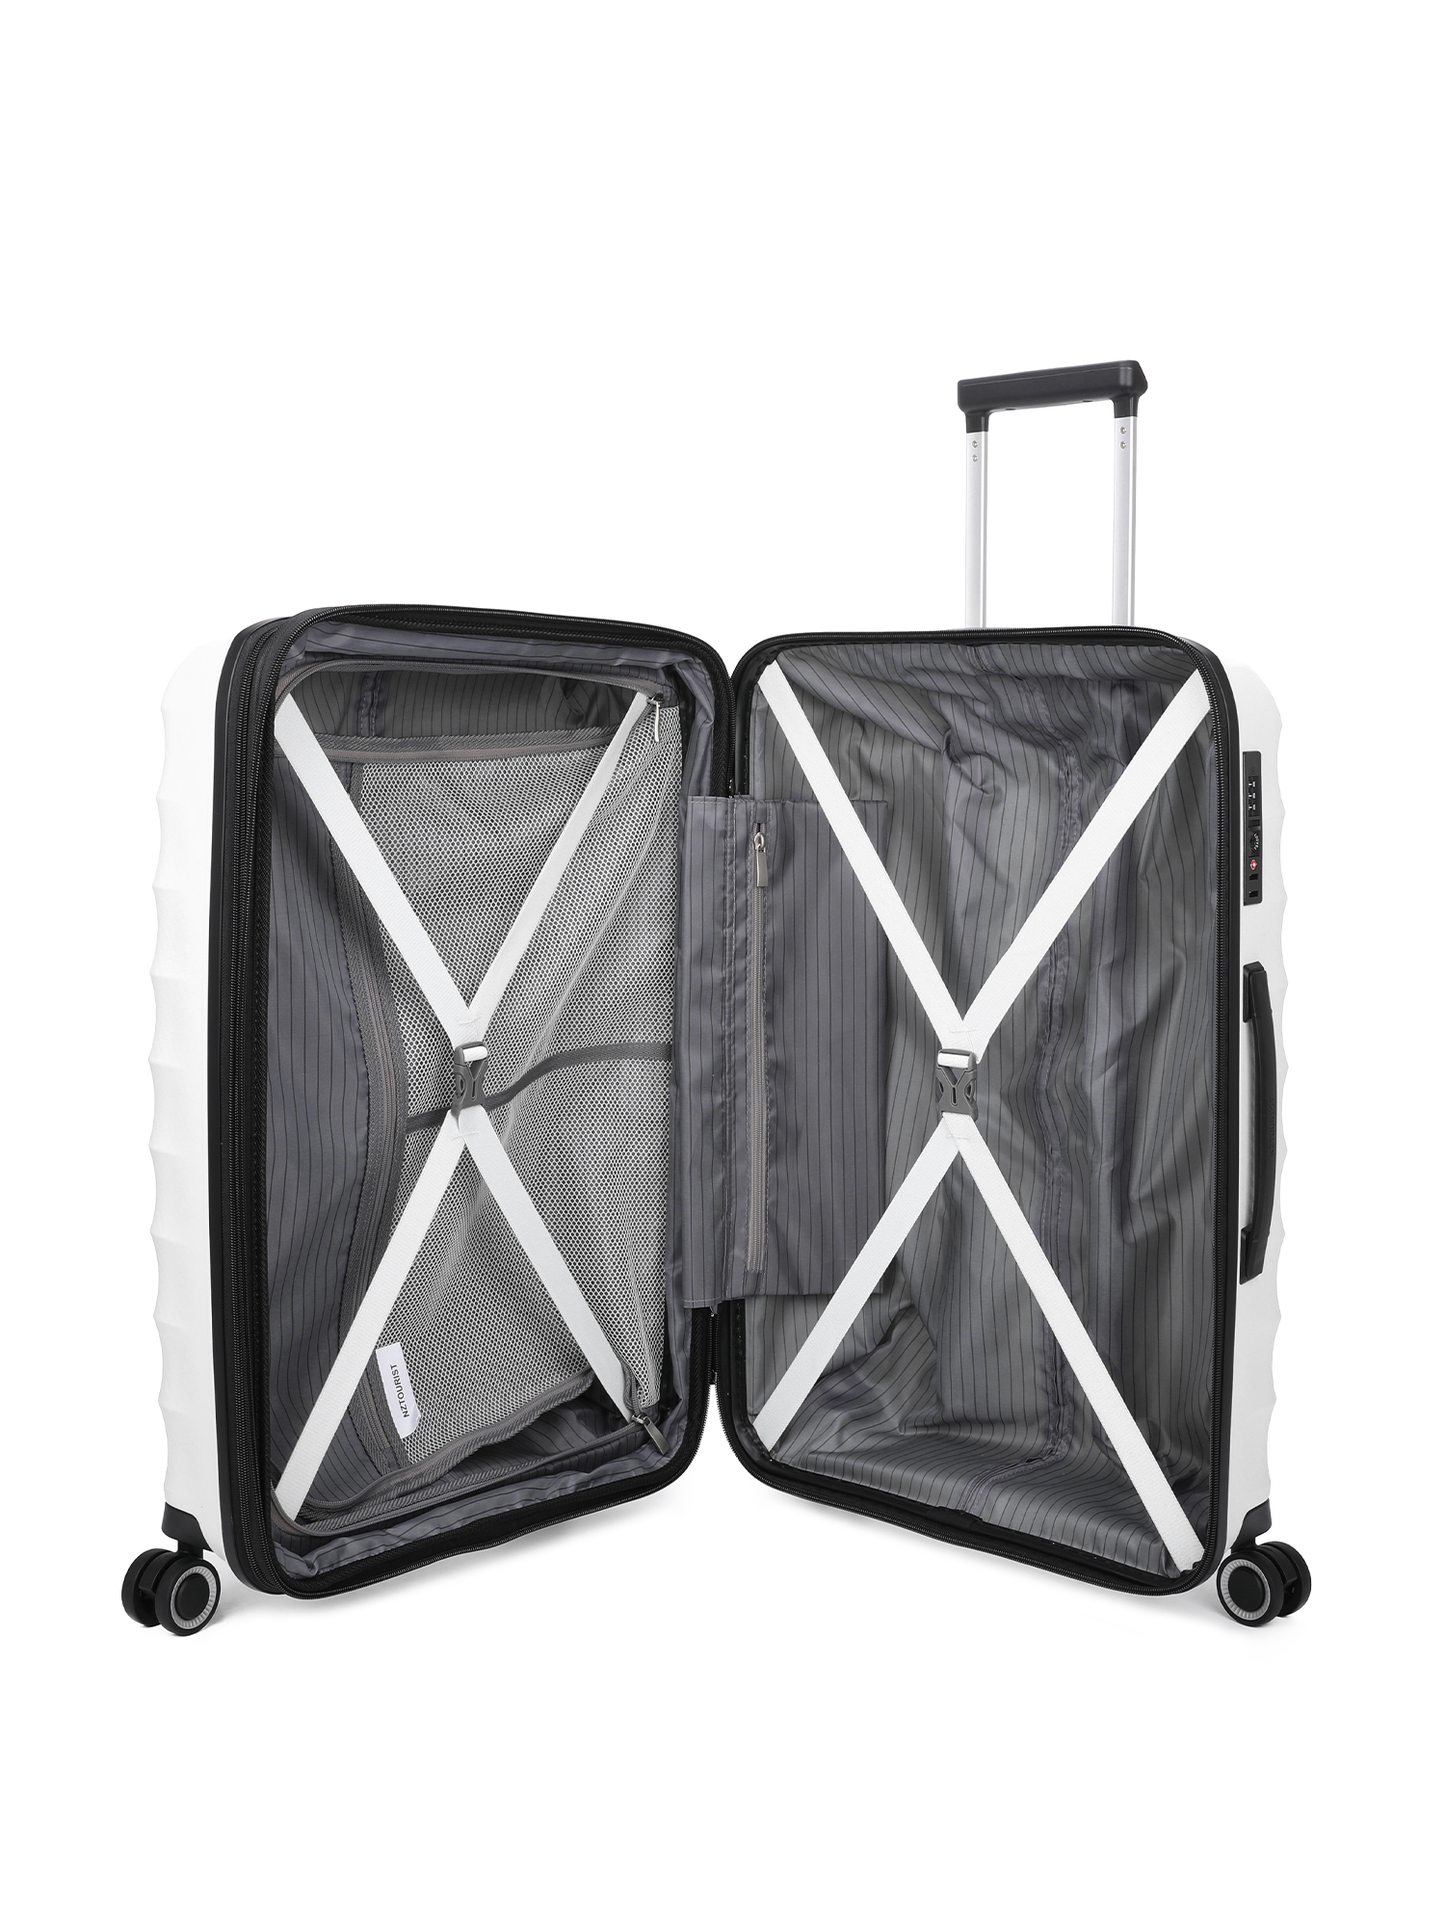 NZTourist Pro Traveller 65cm Suitcase - Yellow